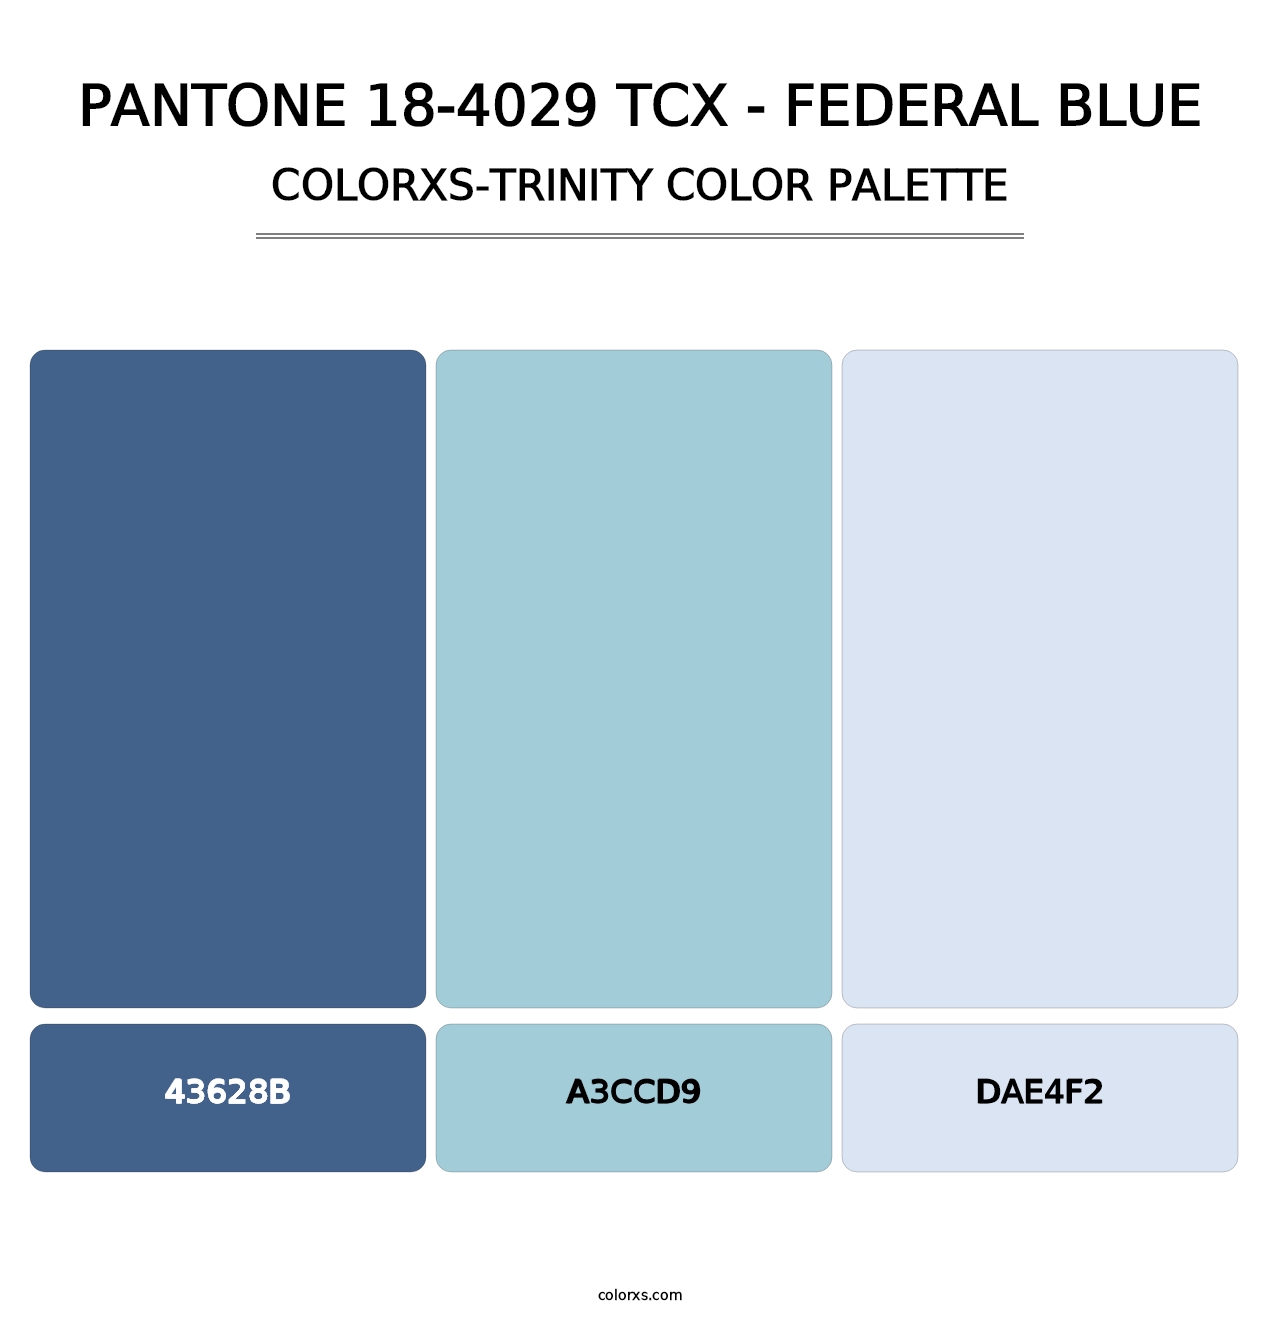 PANTONE 18-4029 TCX - Federal Blue - Colorxs Trinity Palette